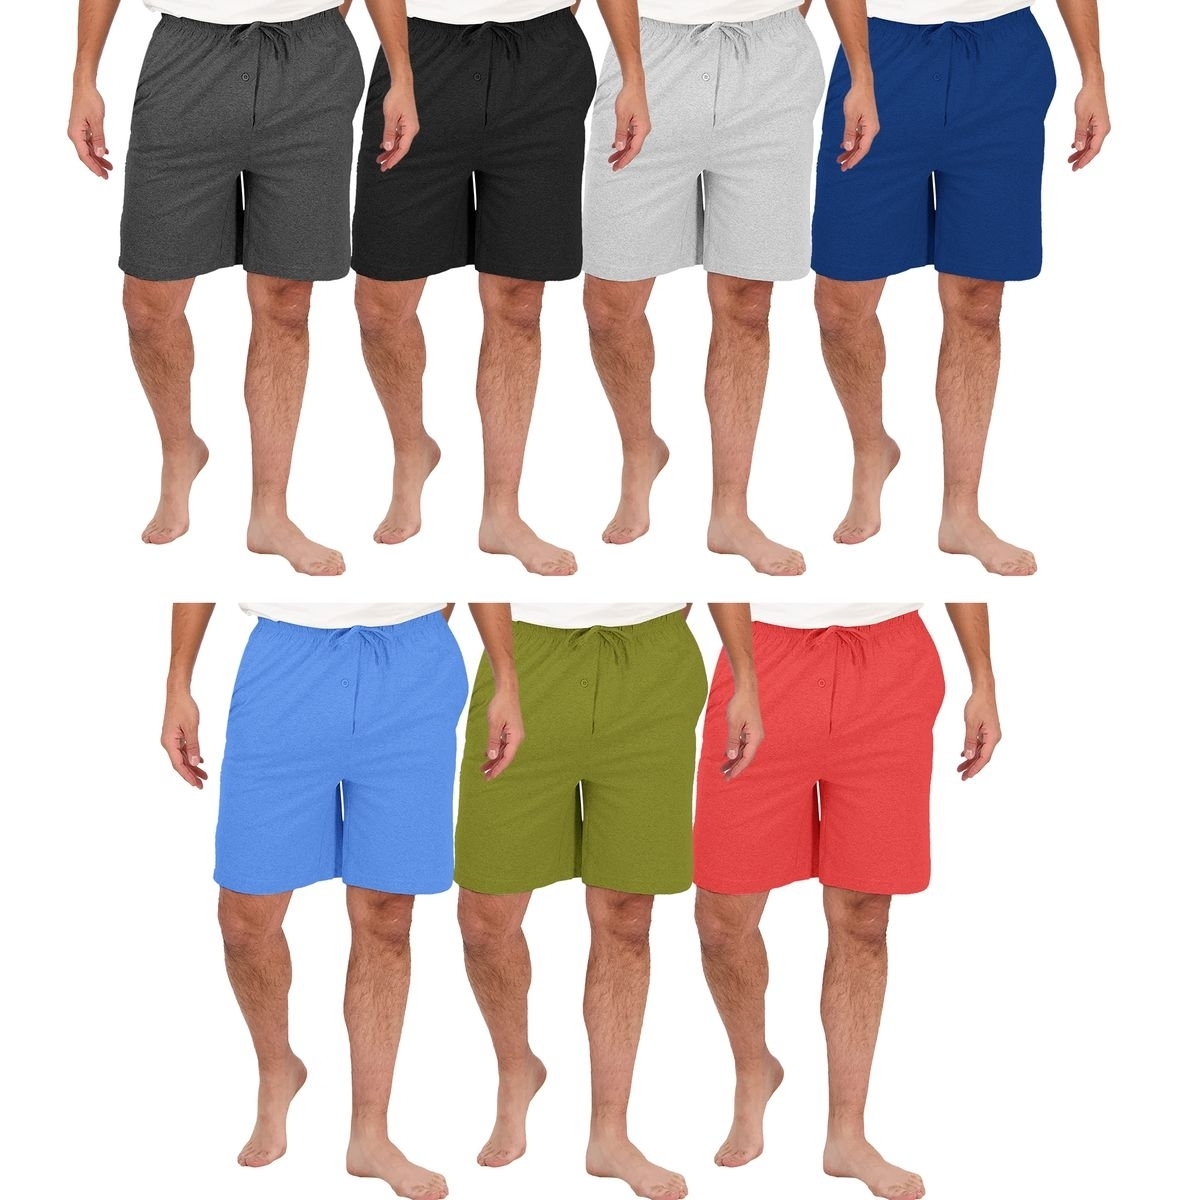 Men's Ultra-Soft Jersey Knit Lounge Sleep Pajama Shorts - Black, Small